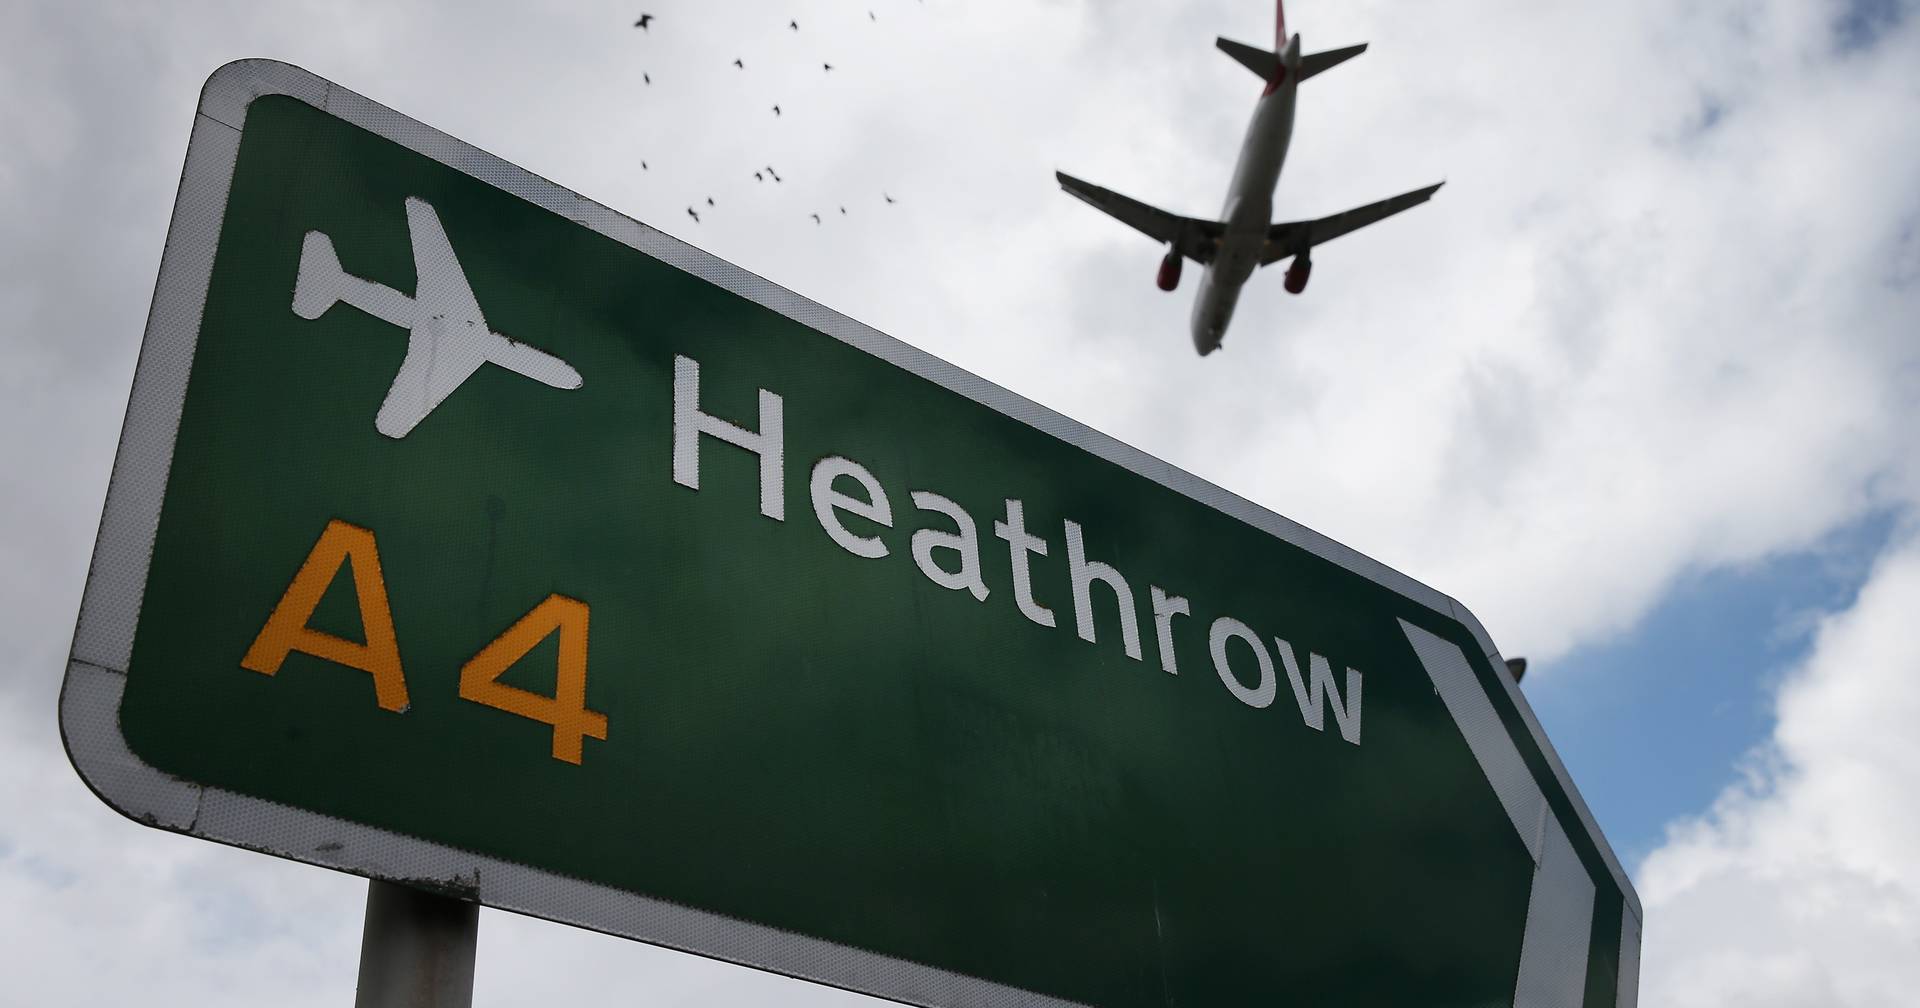 Computer glitch creates chaos at UK airport gates